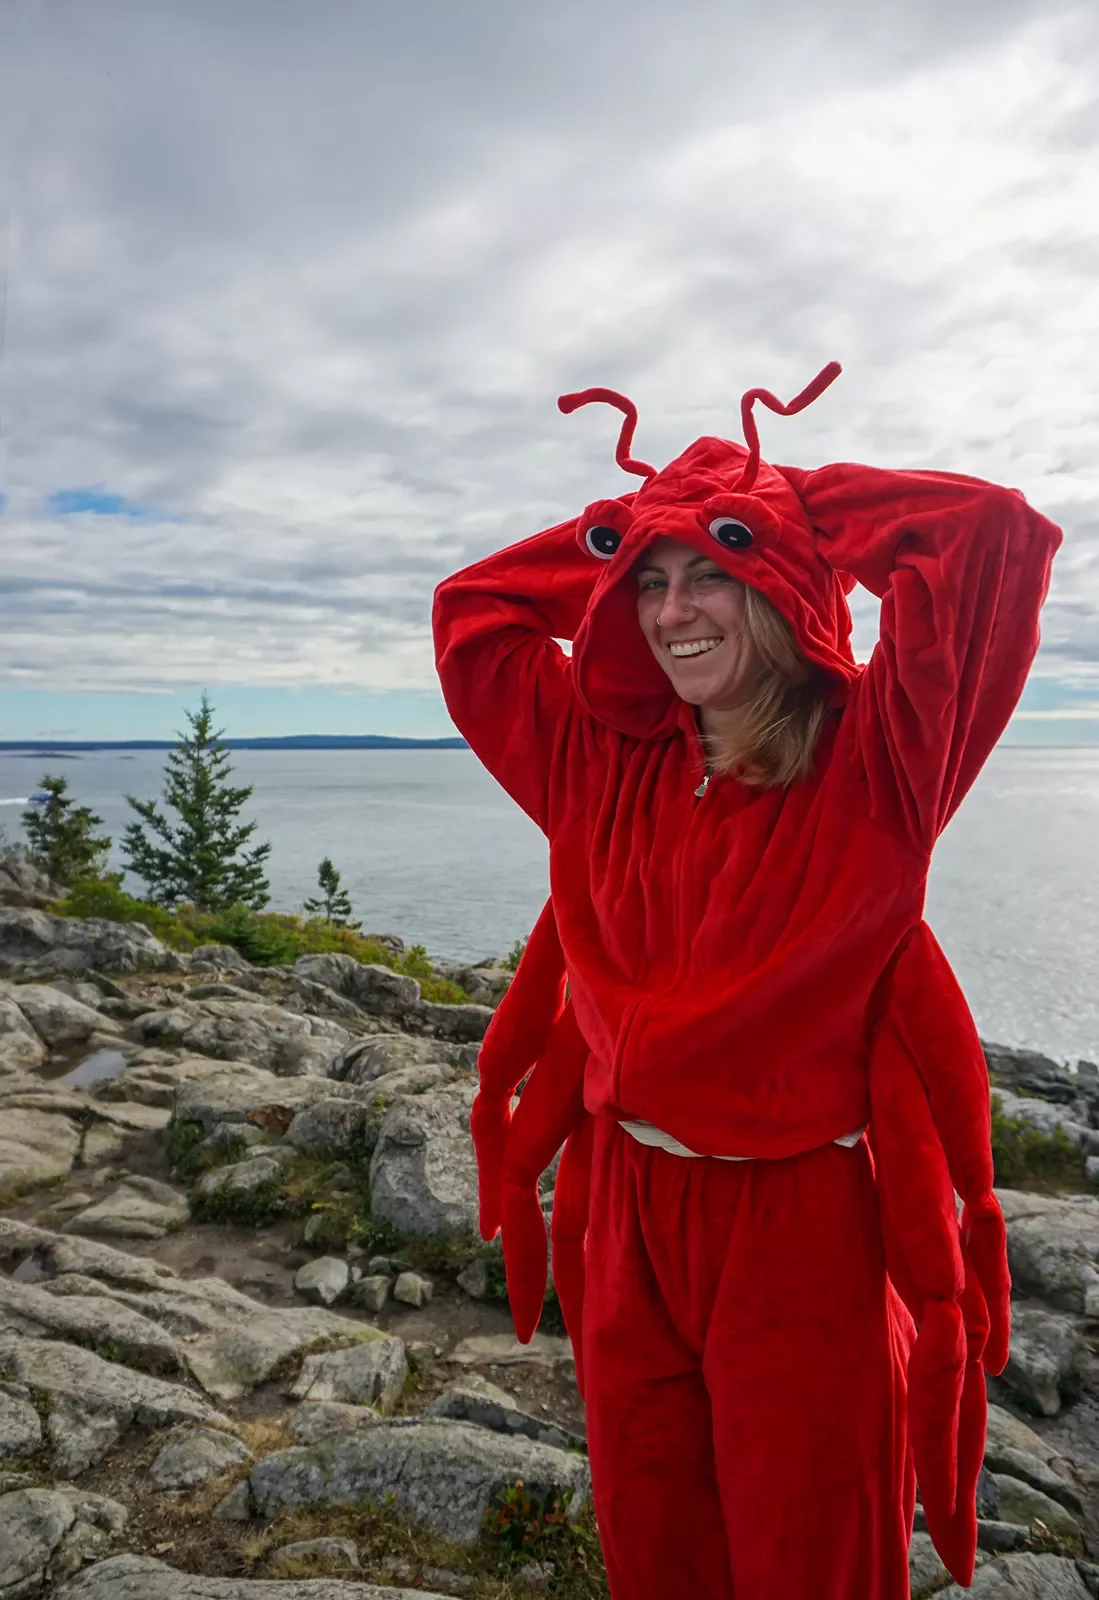 Guest/leader in lobster costume, large lake/ocean in background.